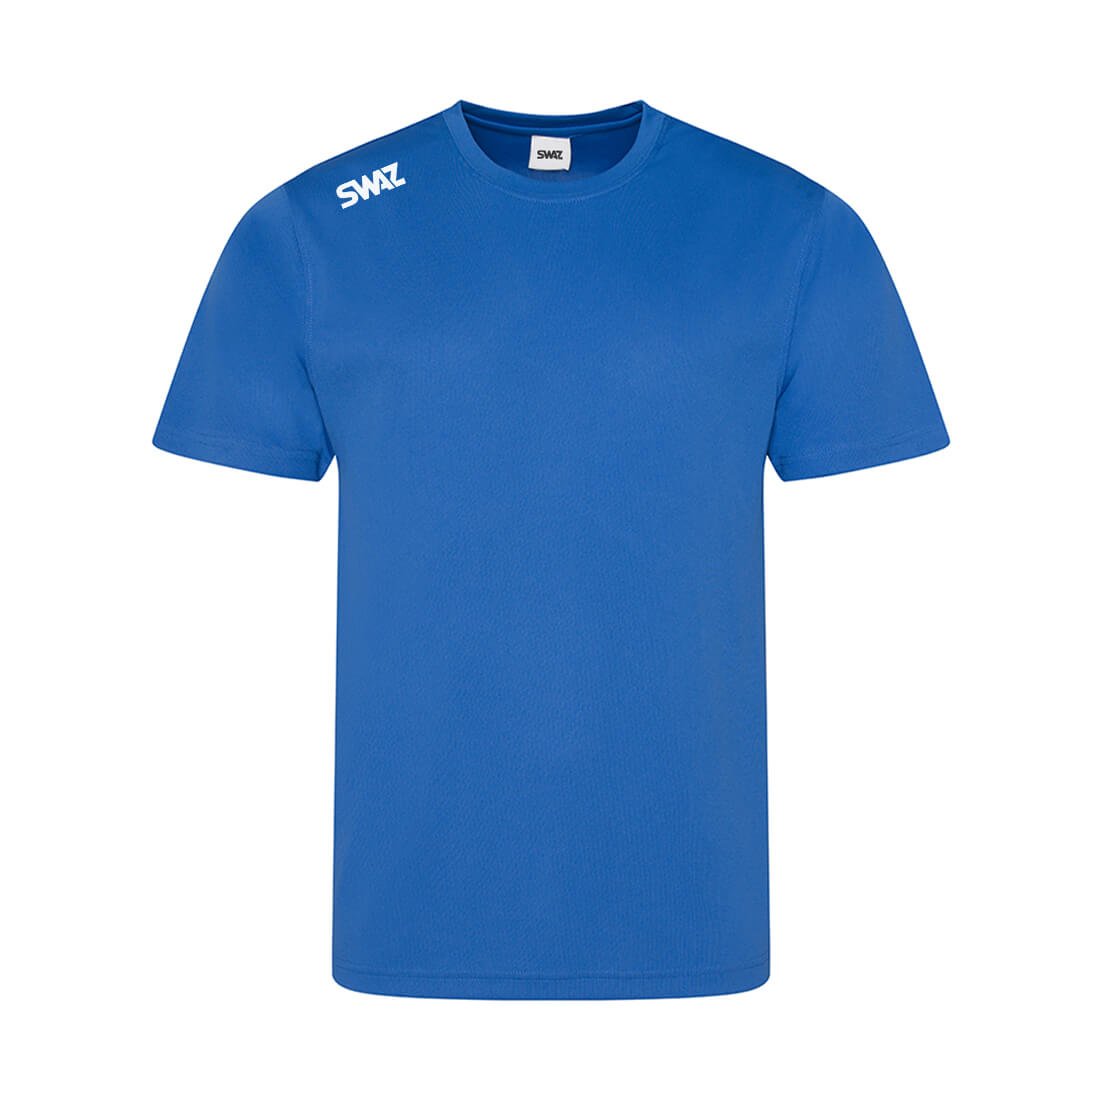 League Football Training Shirt | Football Training Kit and Teamwear – SWAZ